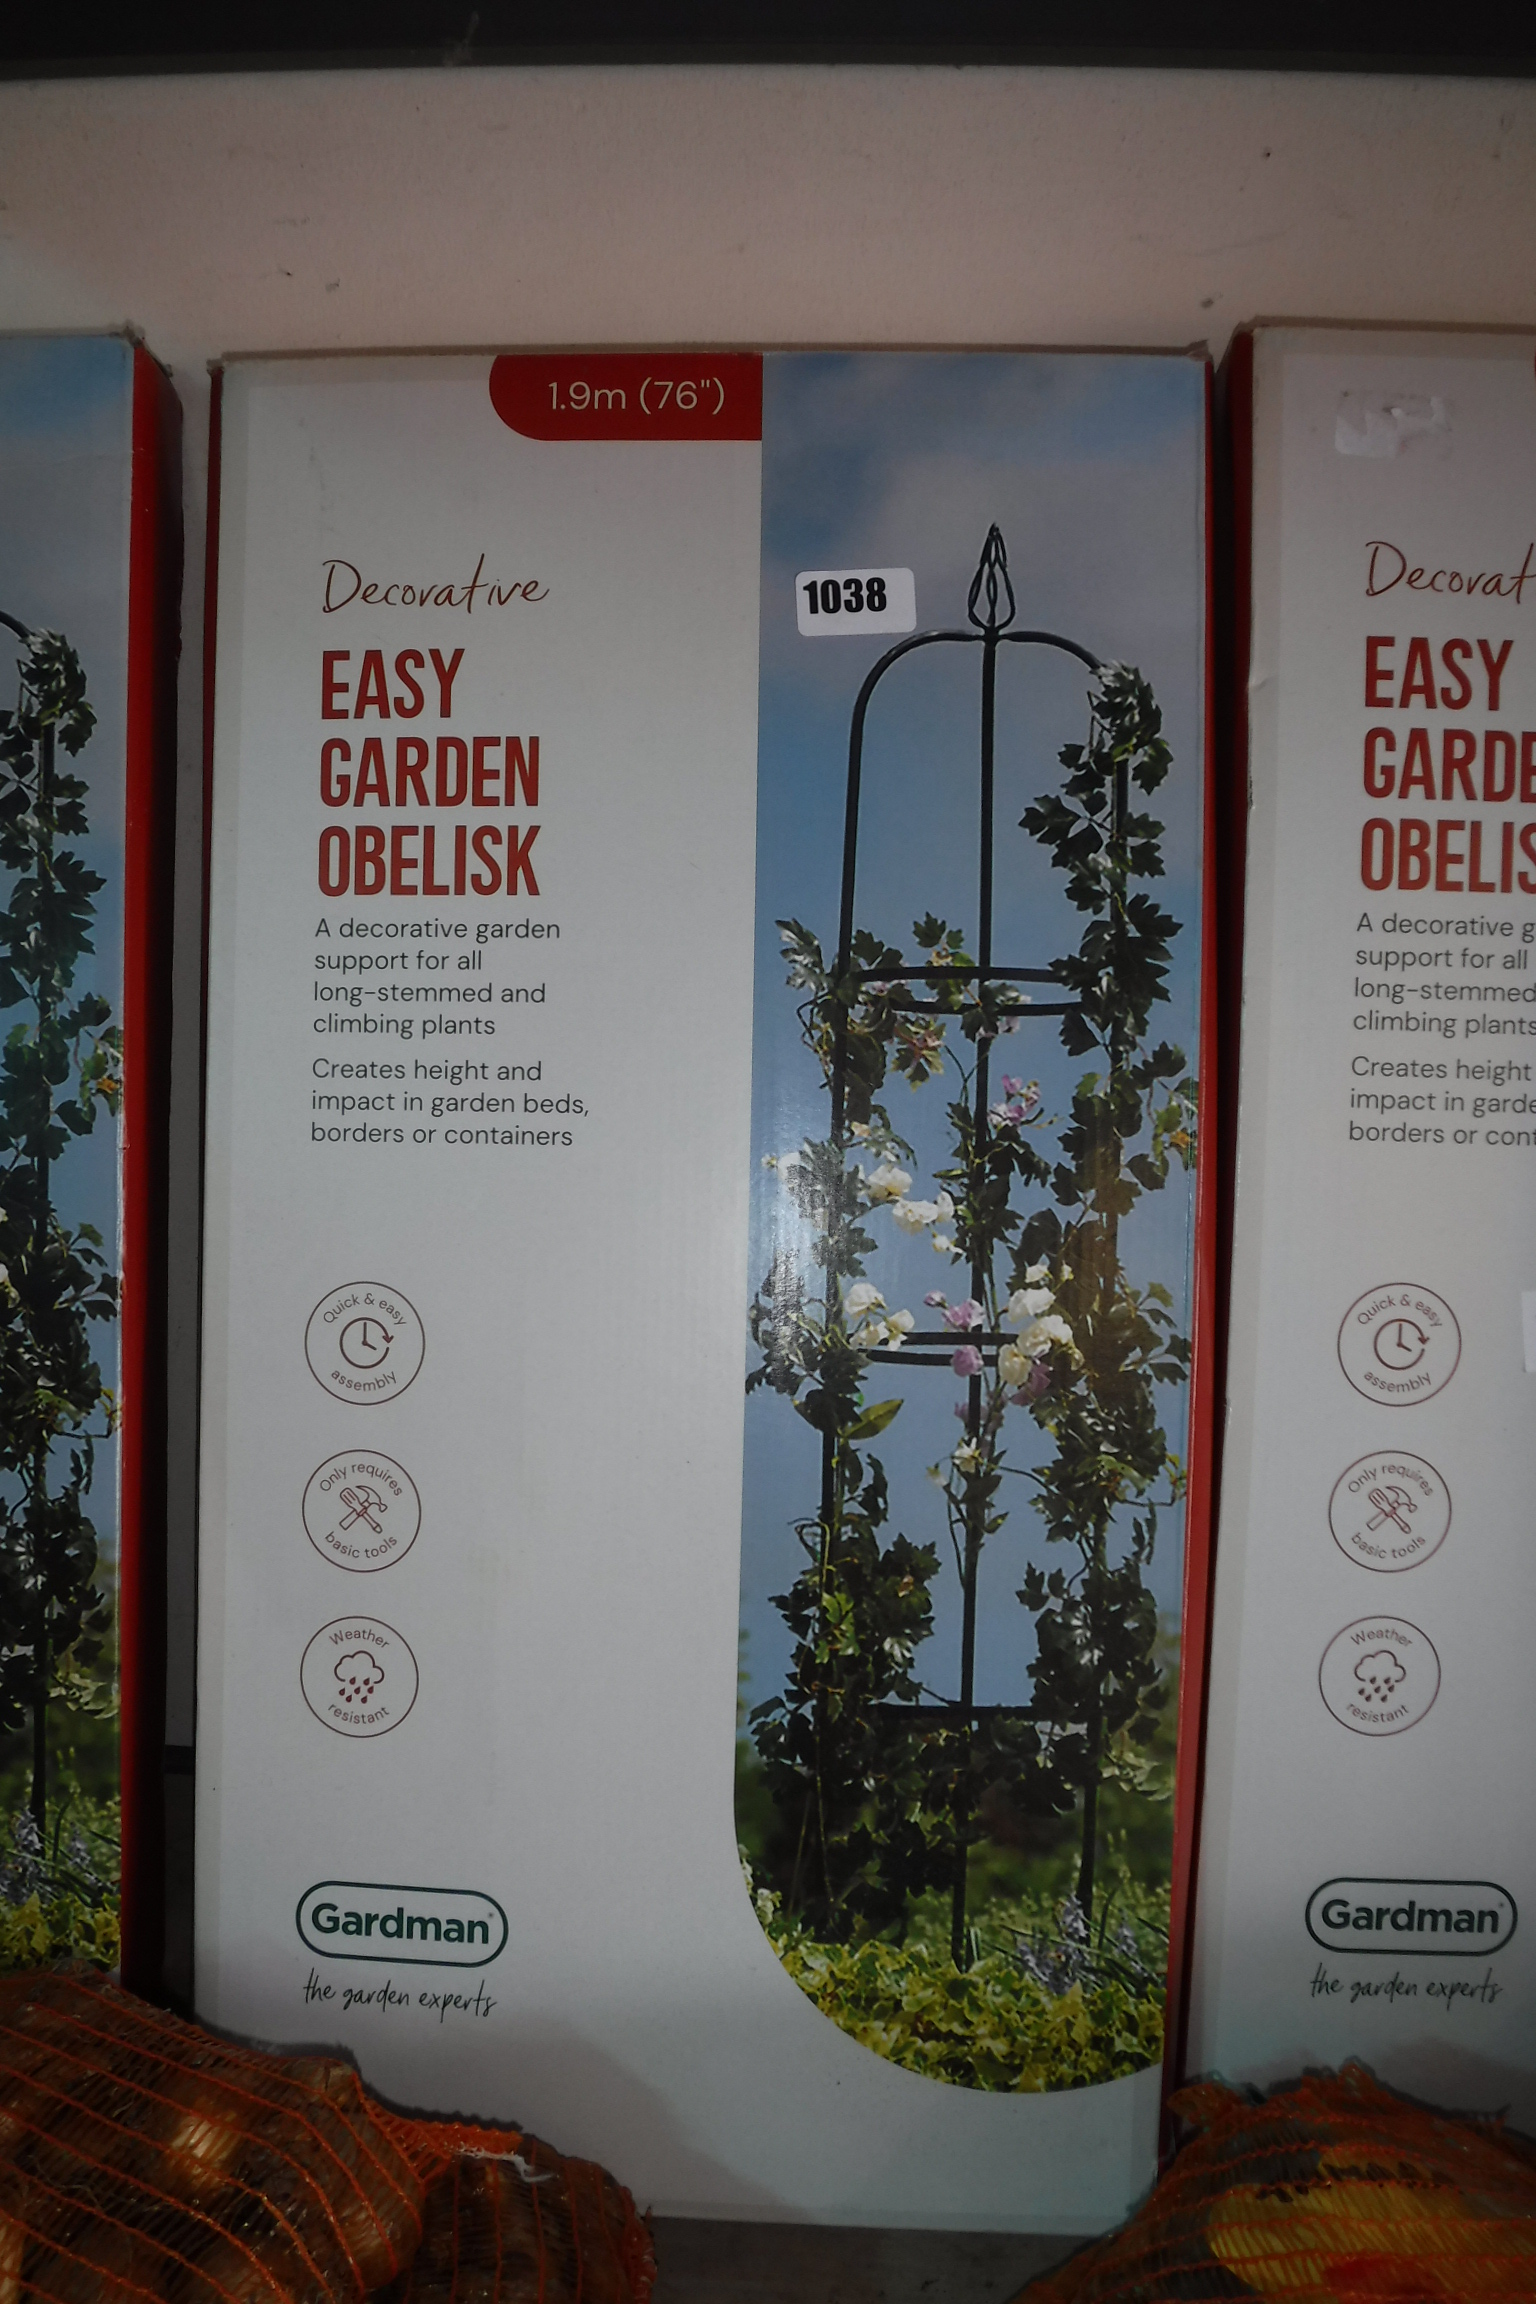 Boxed decorative easy garden obelisk (1.9m)